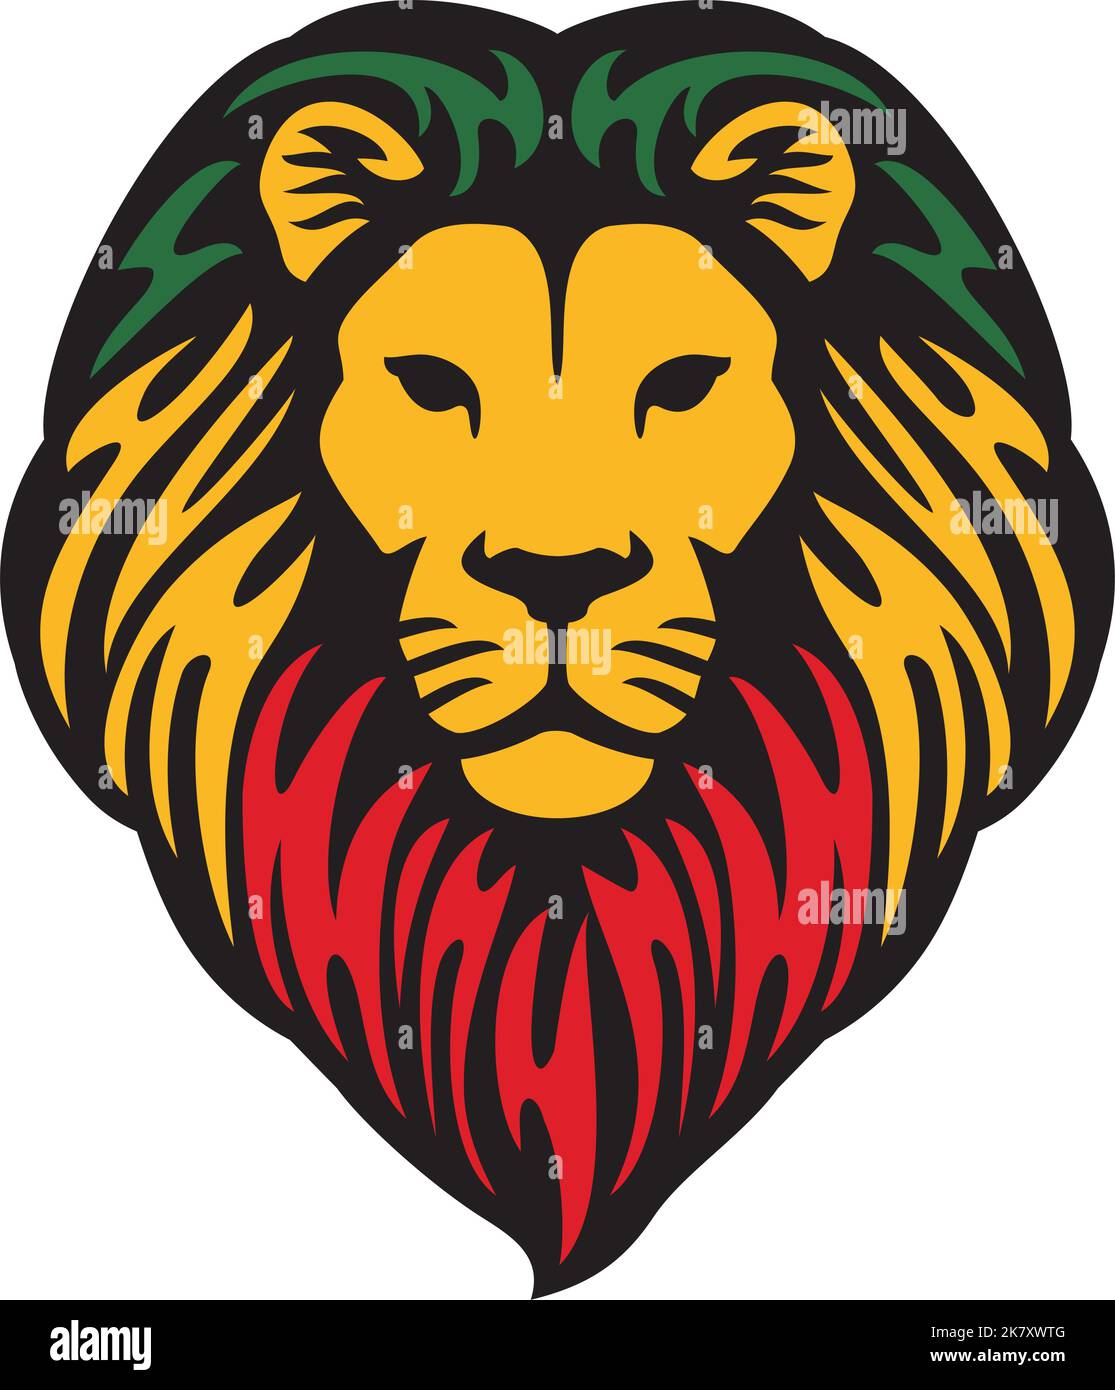 Der Löwe von Judah Head (rastafarian Reggae Symbol). Vektorgrafik. Stock Vektor